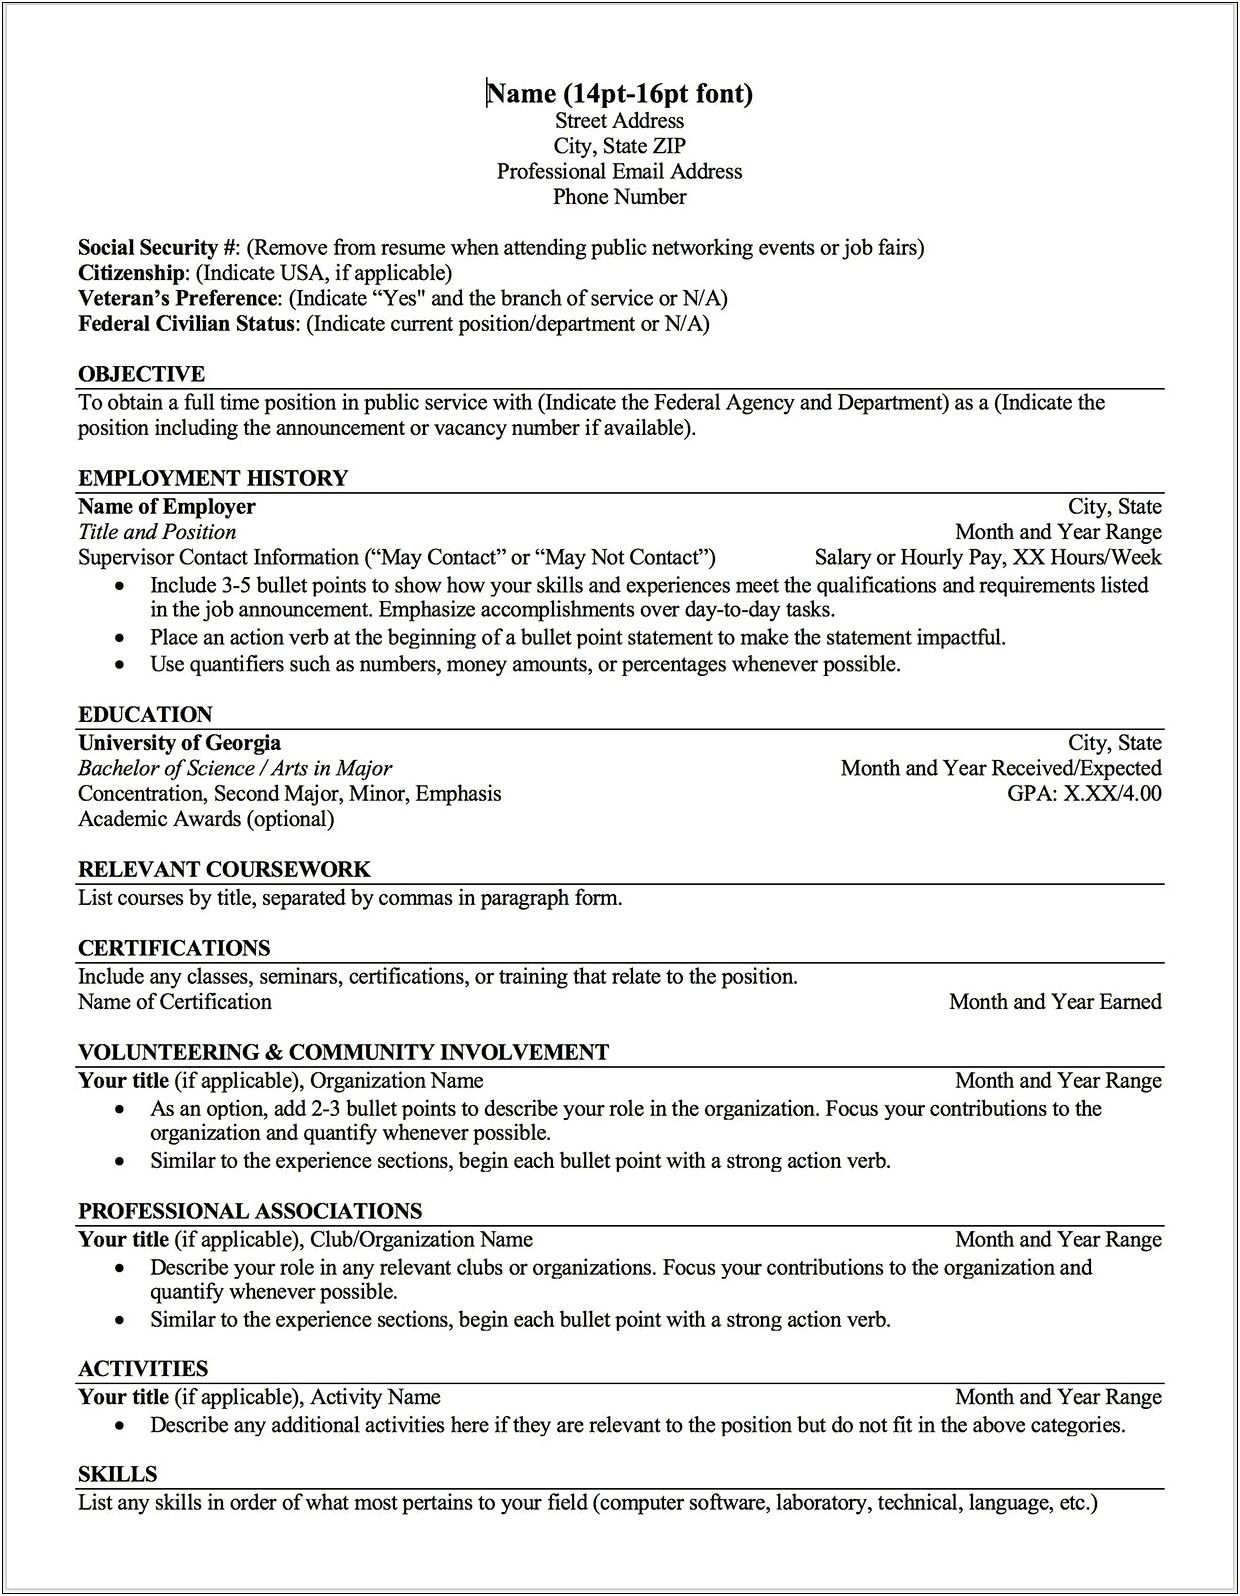 Where To Put Minor On Resume